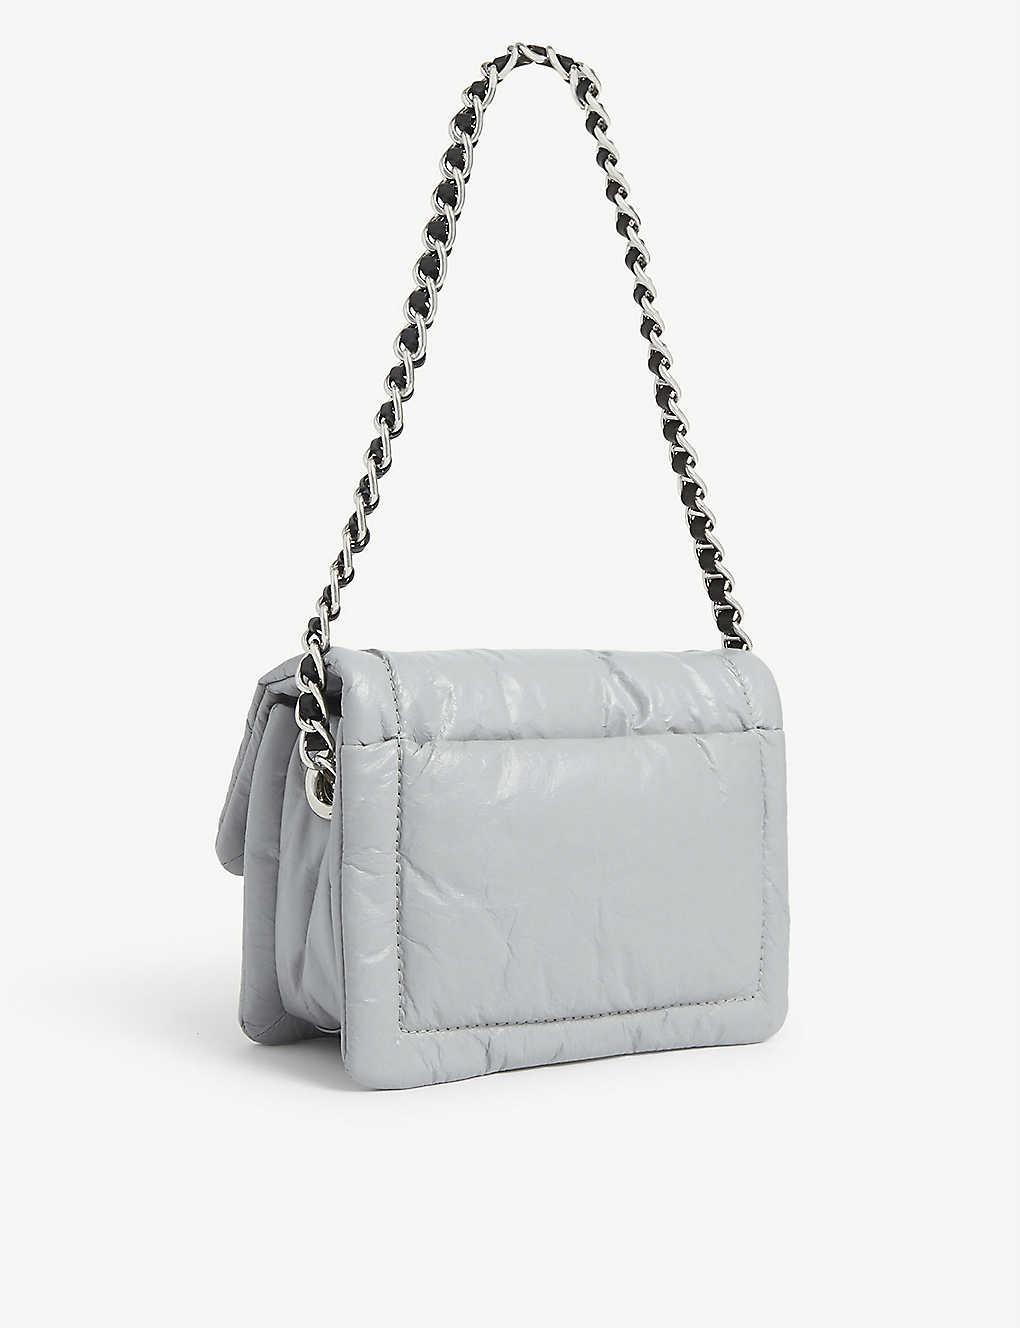 Marc Jacobs - Not-so-heavy lifting 💪 THE Mini Pillow Bag